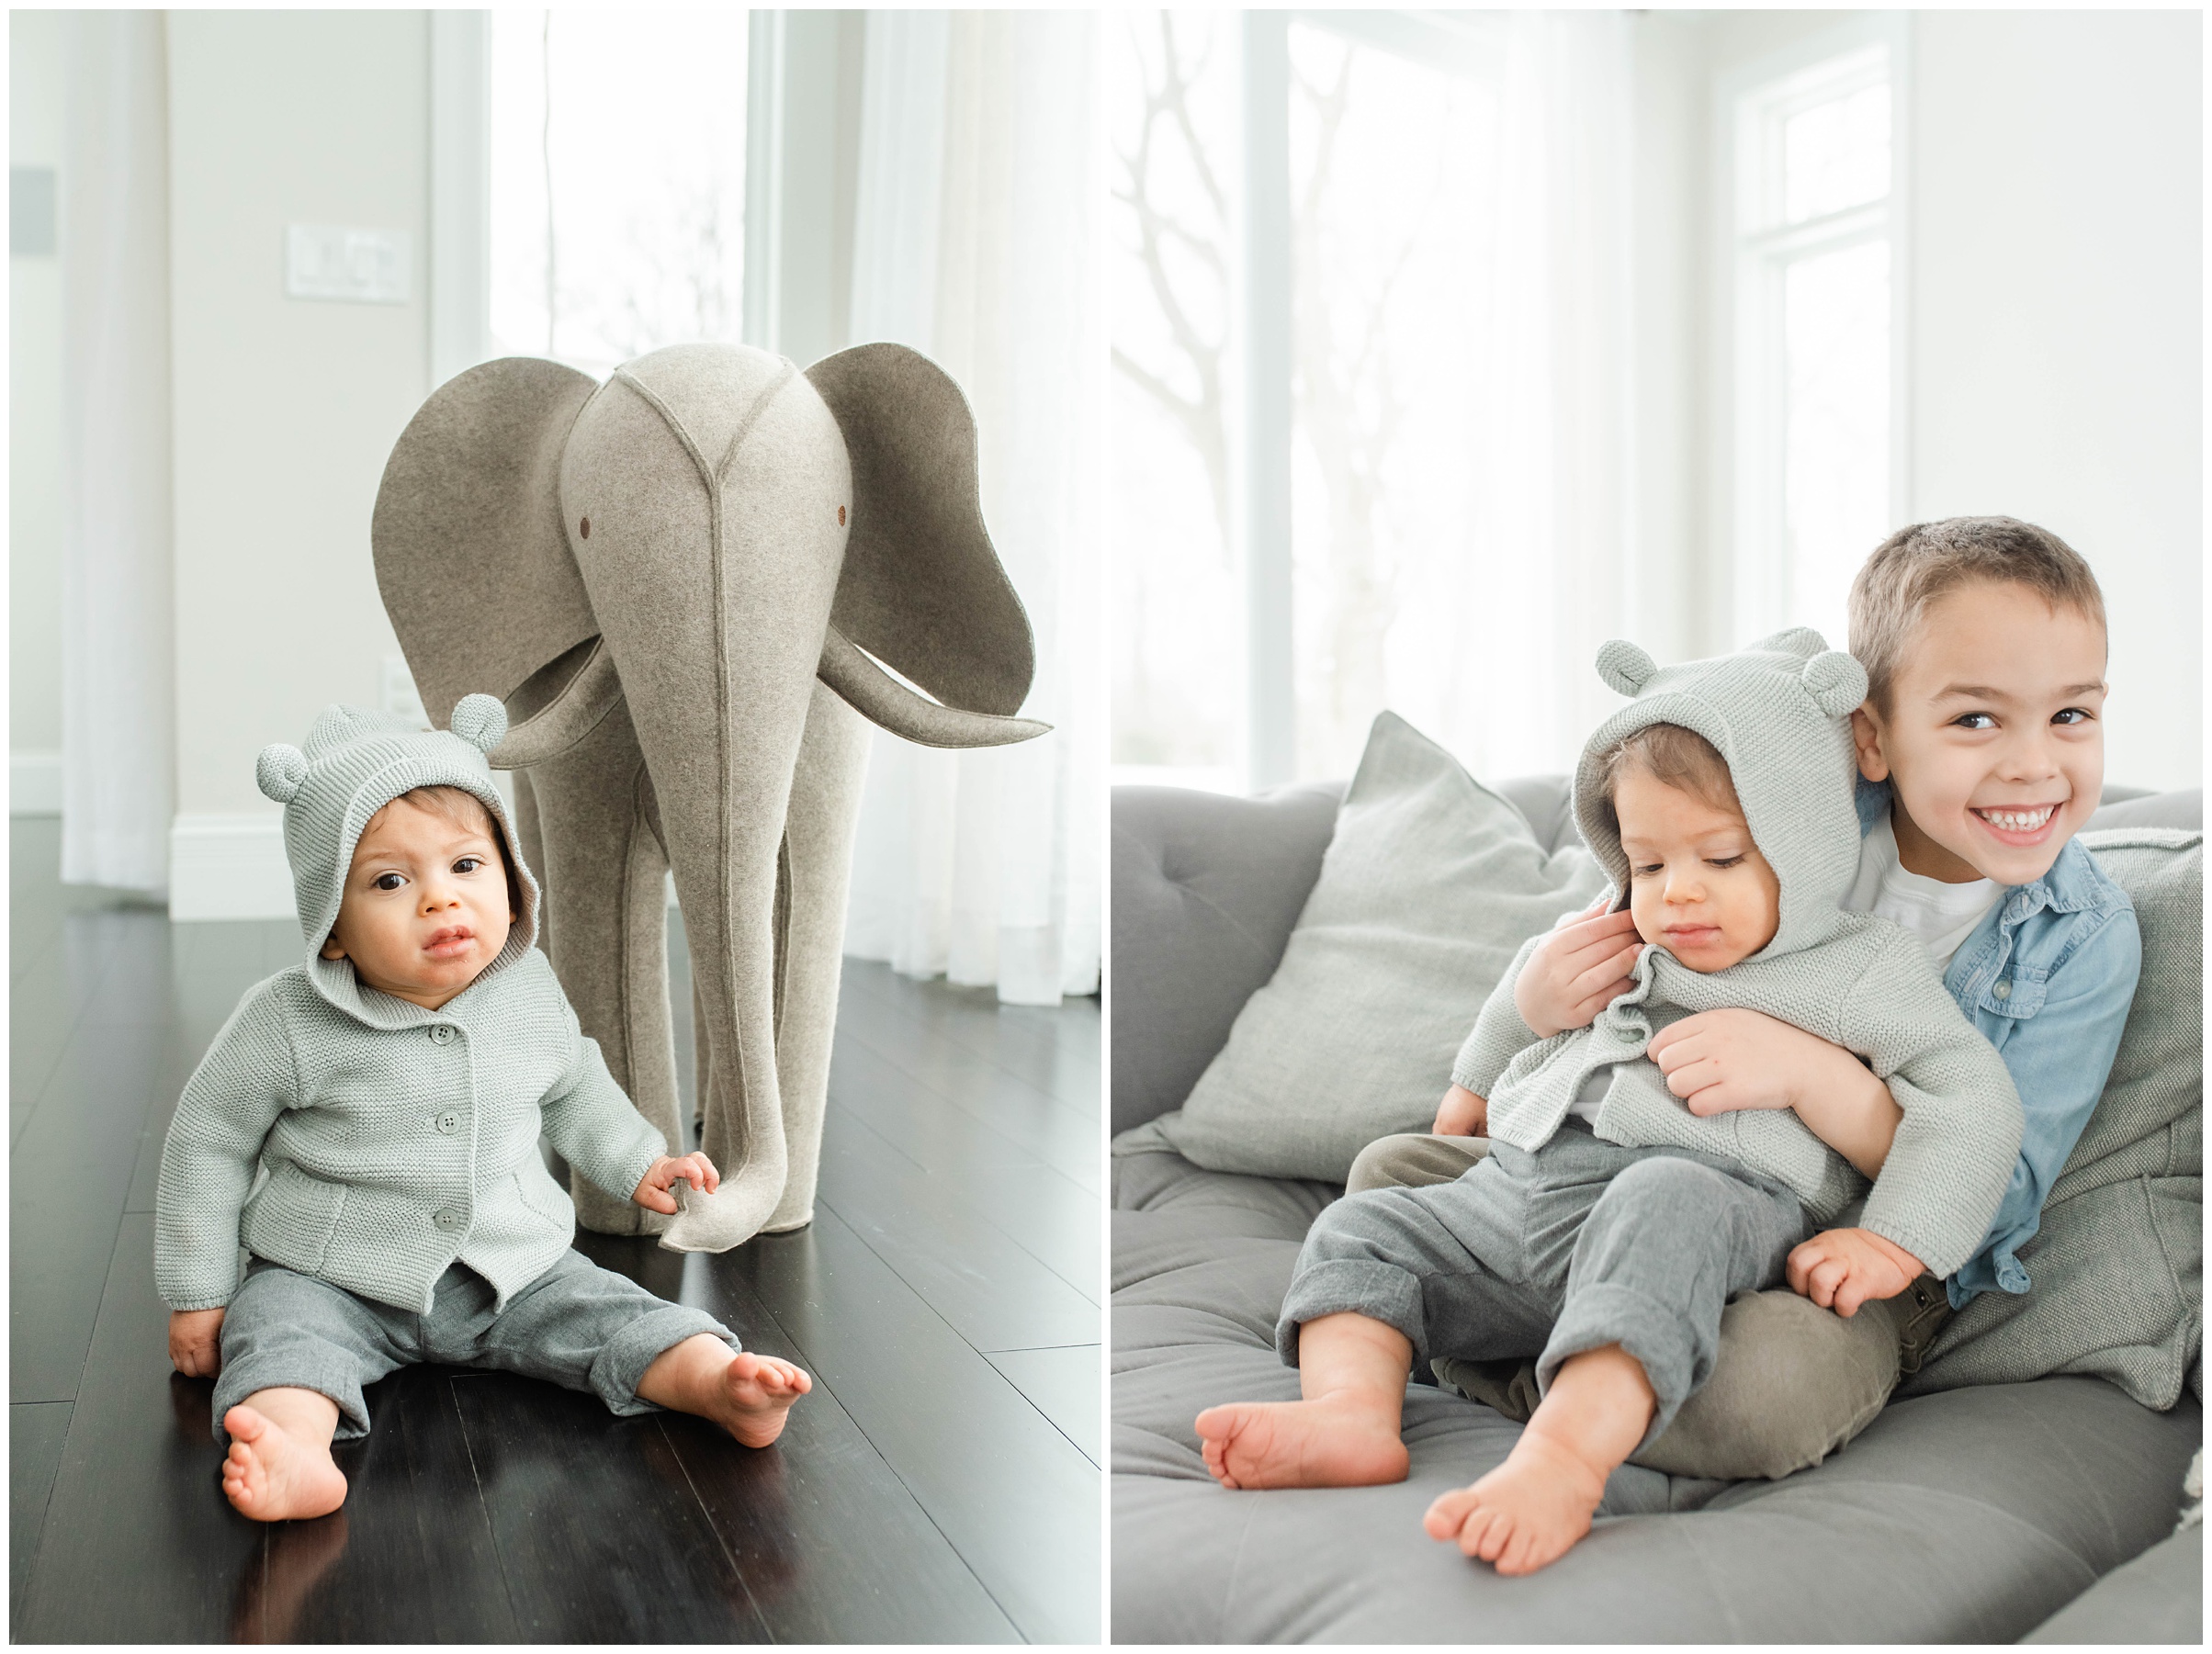 baby with stuffed elephant